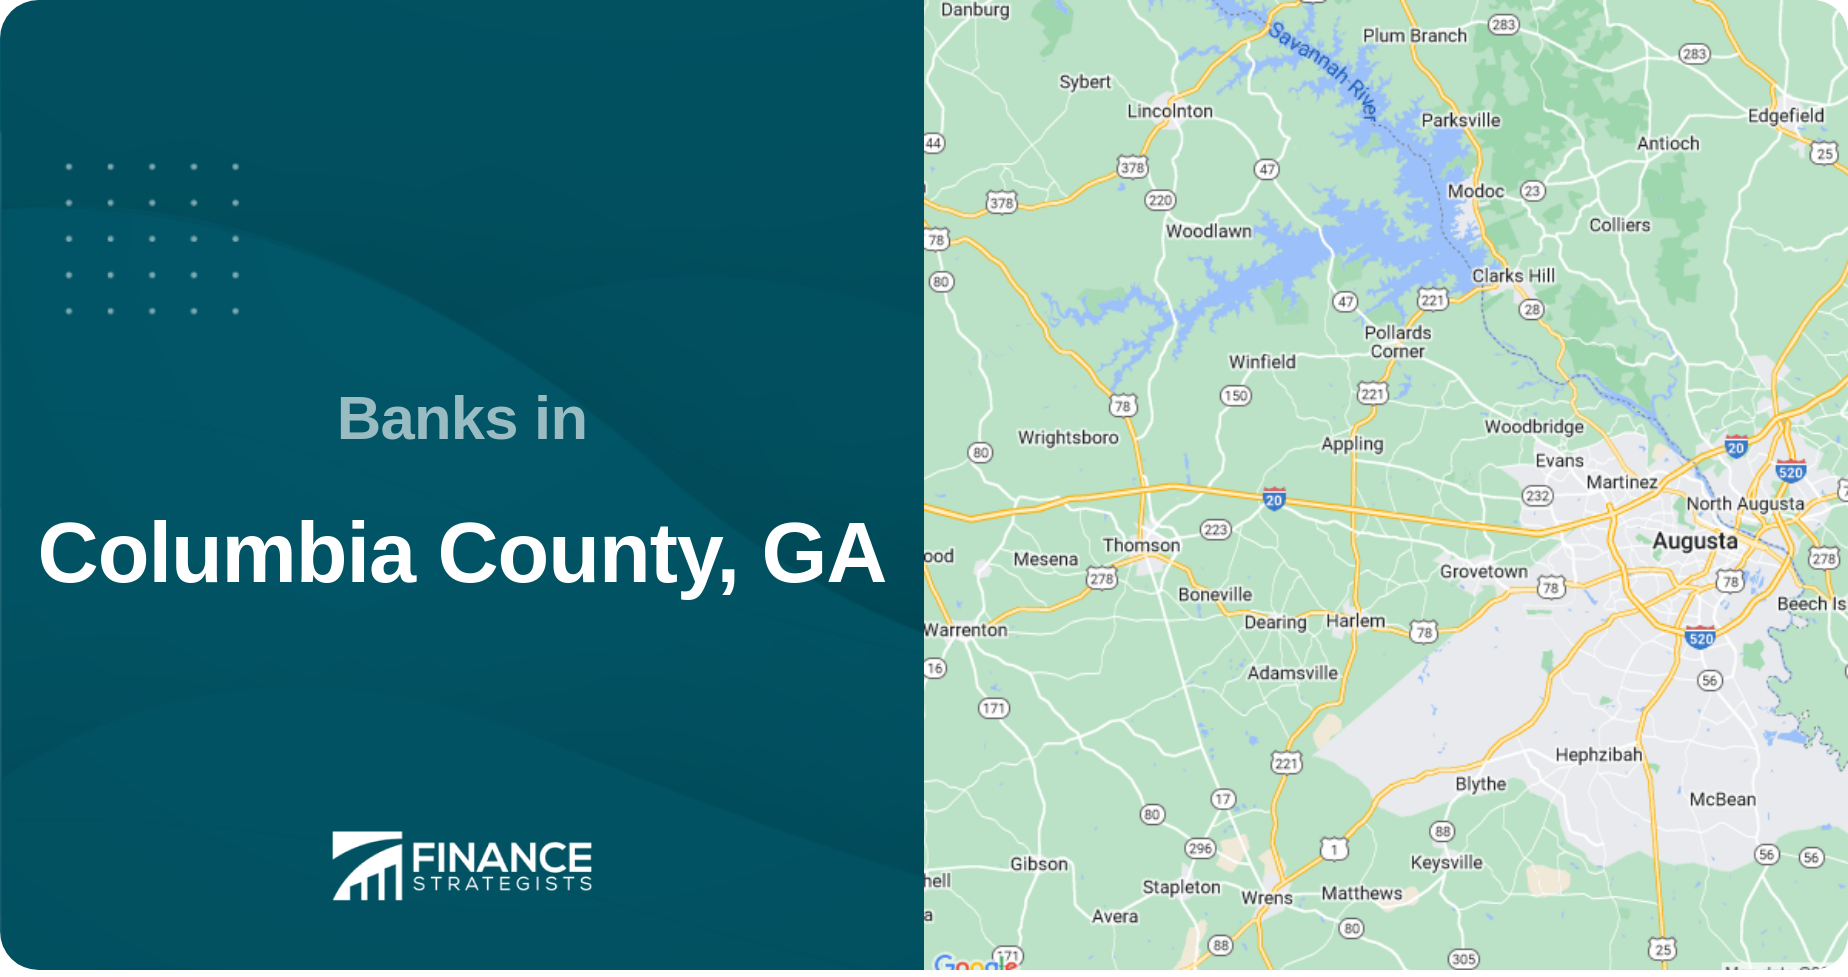 Banks in Columbia County, GA